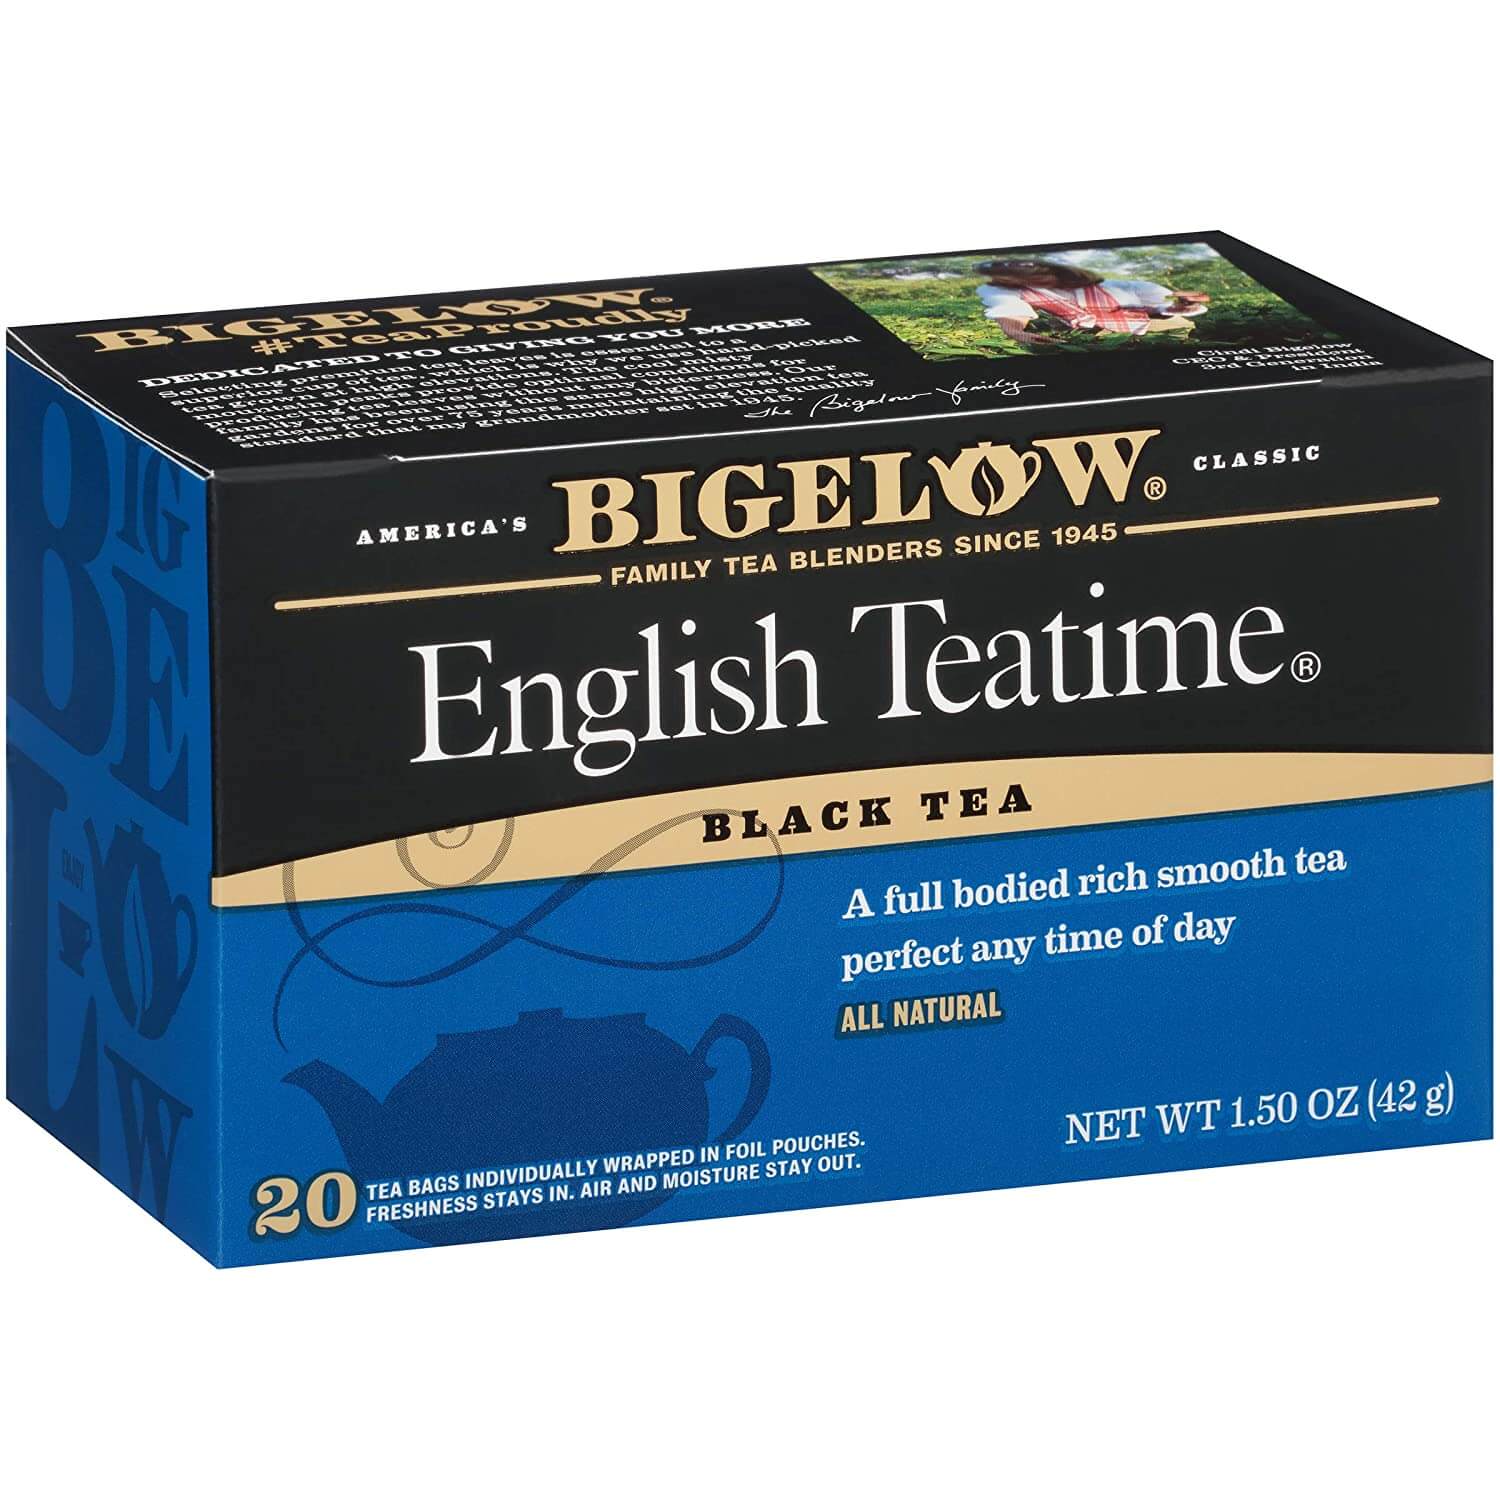 Bigelow English Teatime Black Tea